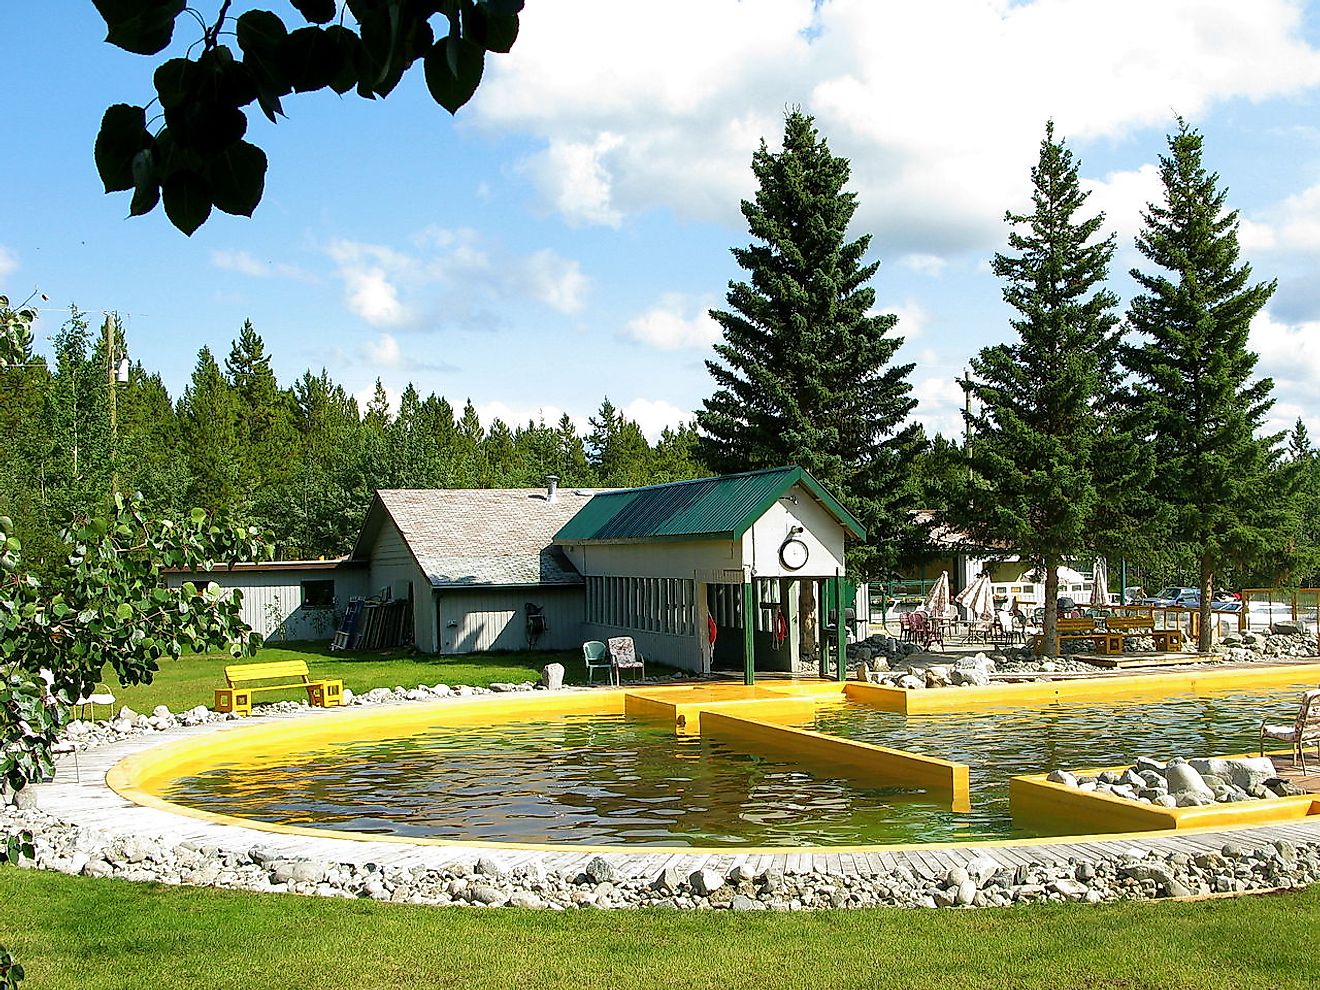 Takhini Hot Springs. Image credit: Andrewumbrich/Wikimedia.org